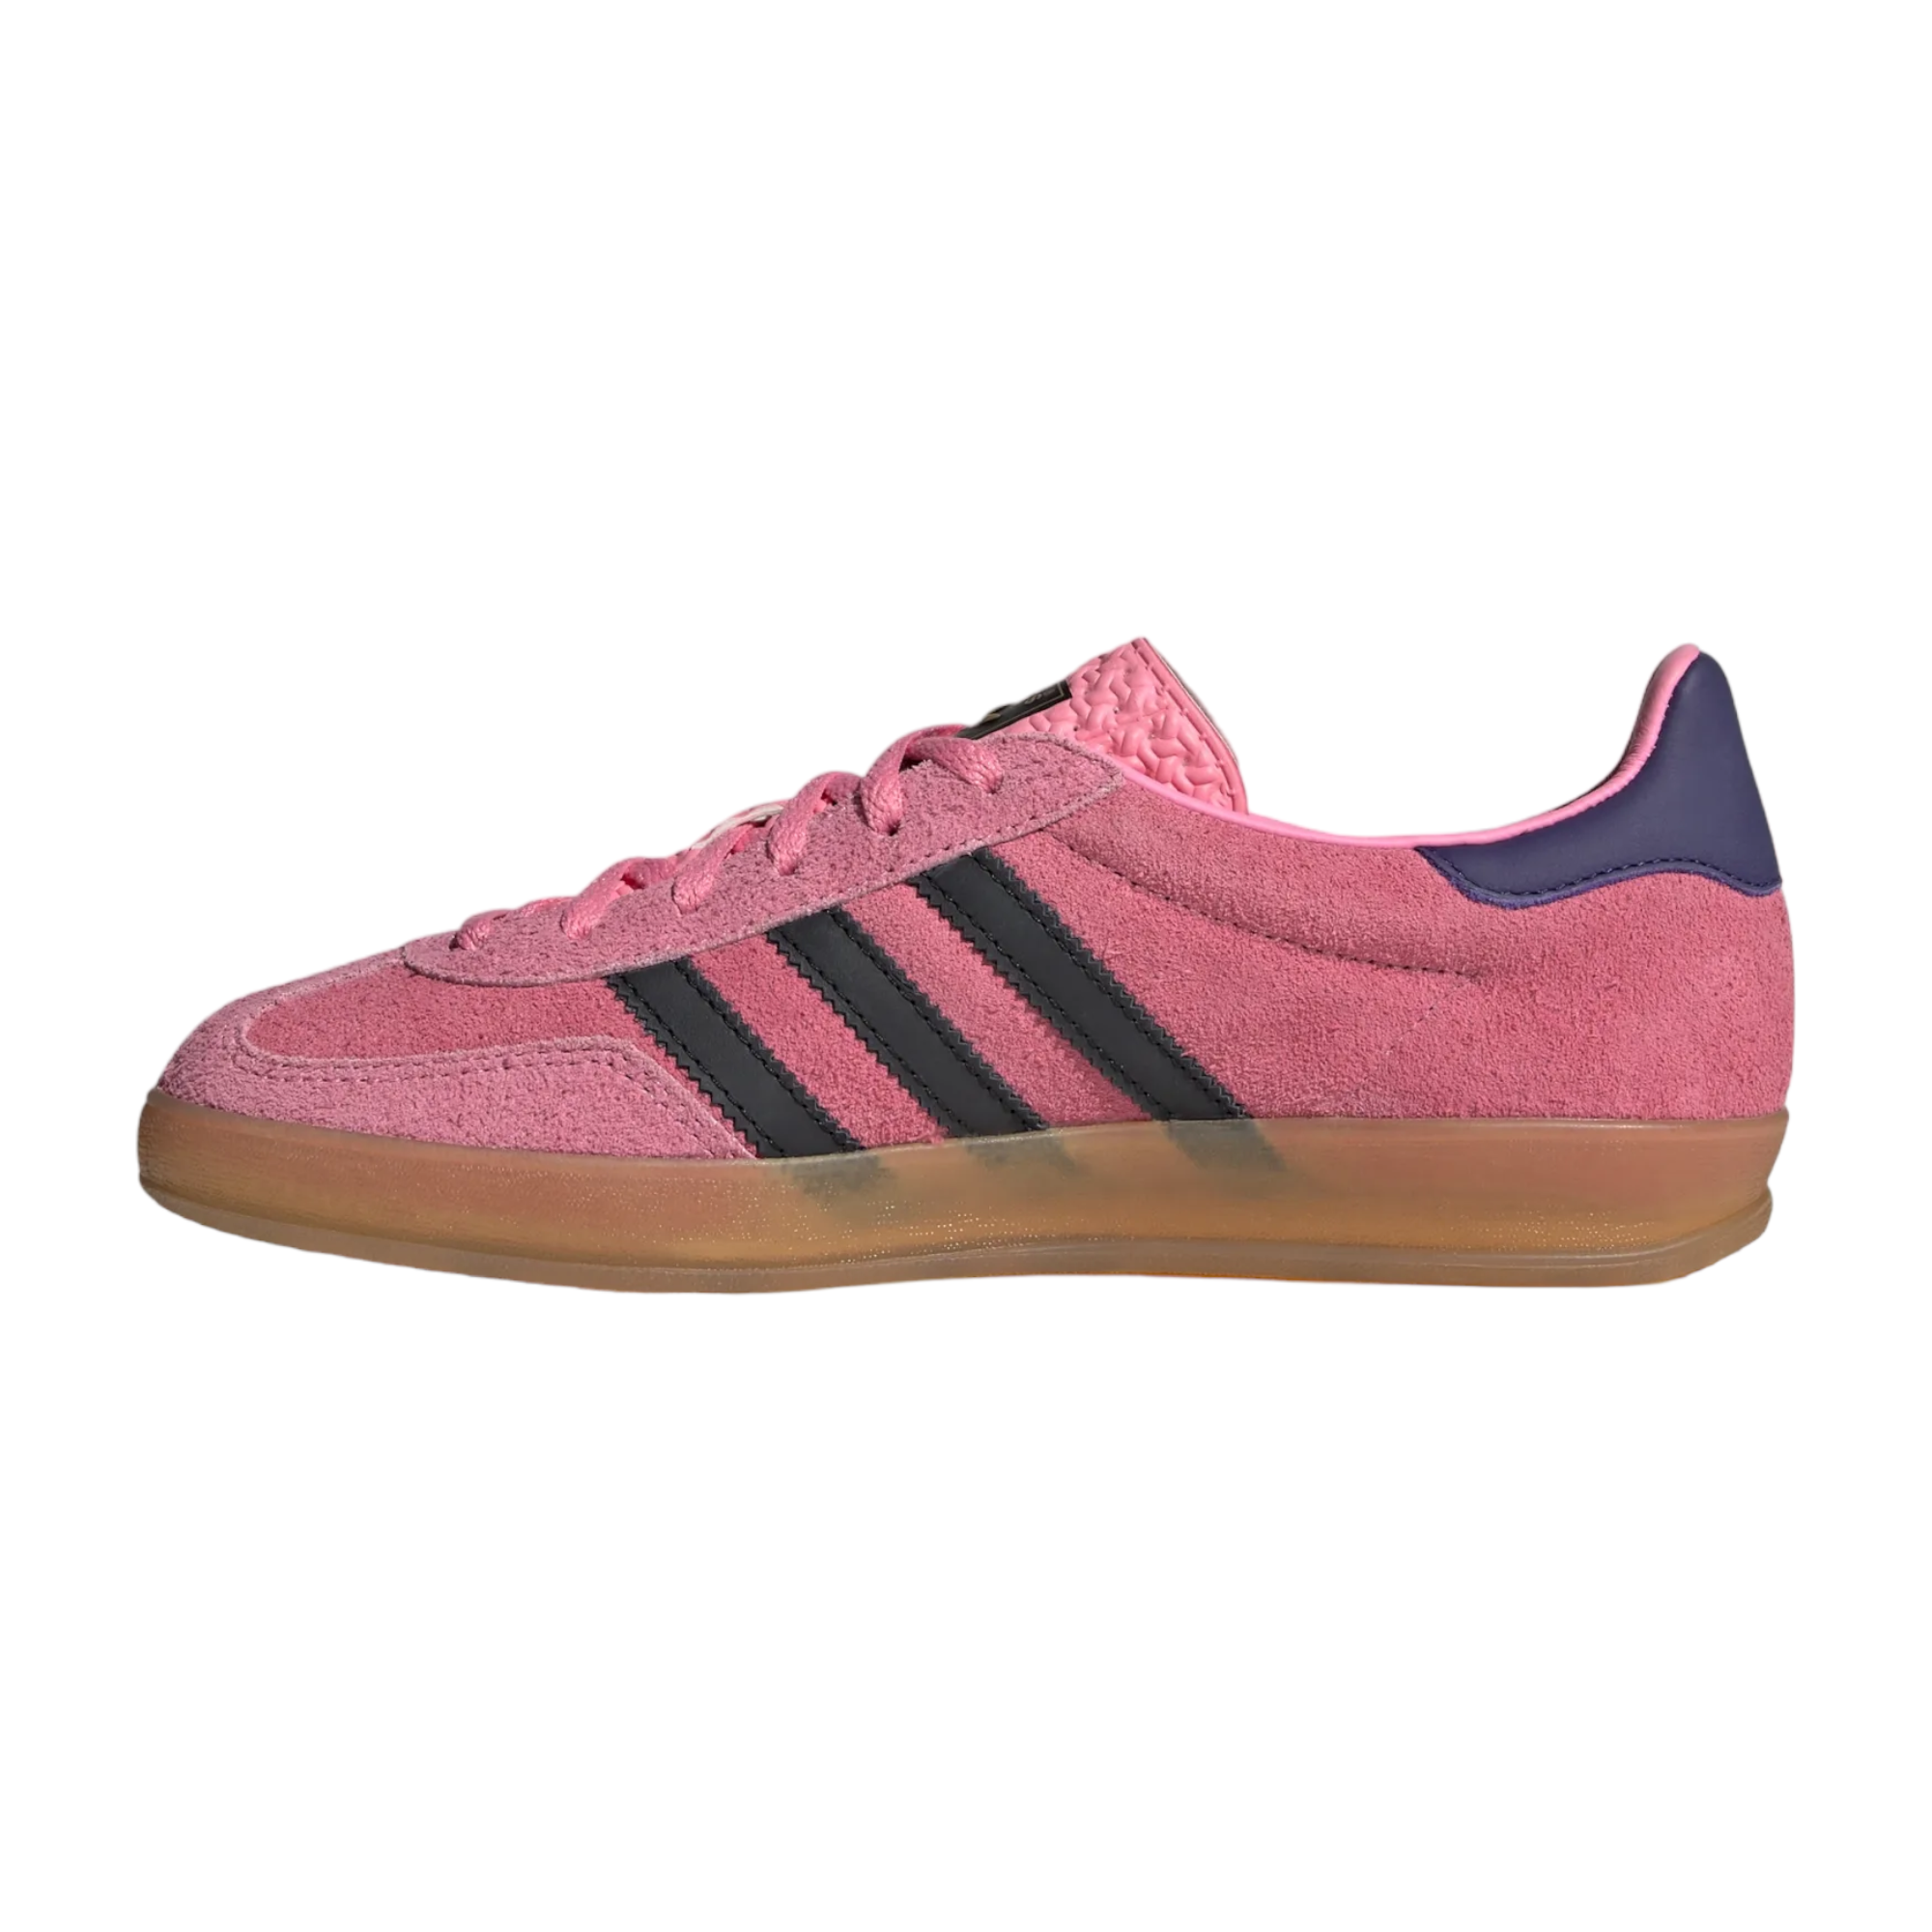 adidas gazelle pink size 8